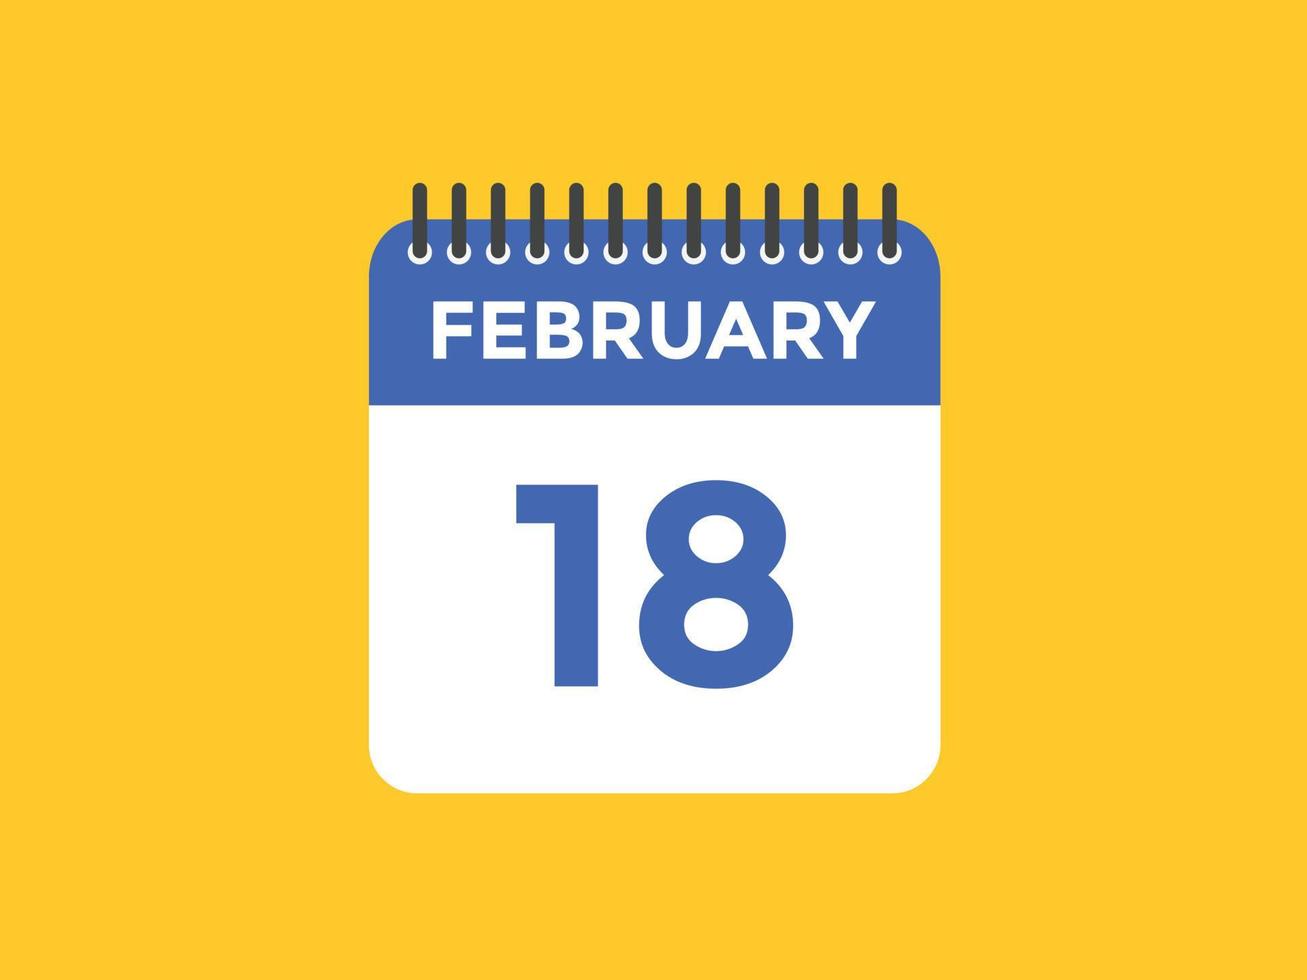 18. Februar Kalendererinnerung. 18. februar tägliche kalendersymbolvorlage. Kalender 18. Februar Icon-Design-Vorlage. Vektor-Illustration vektor